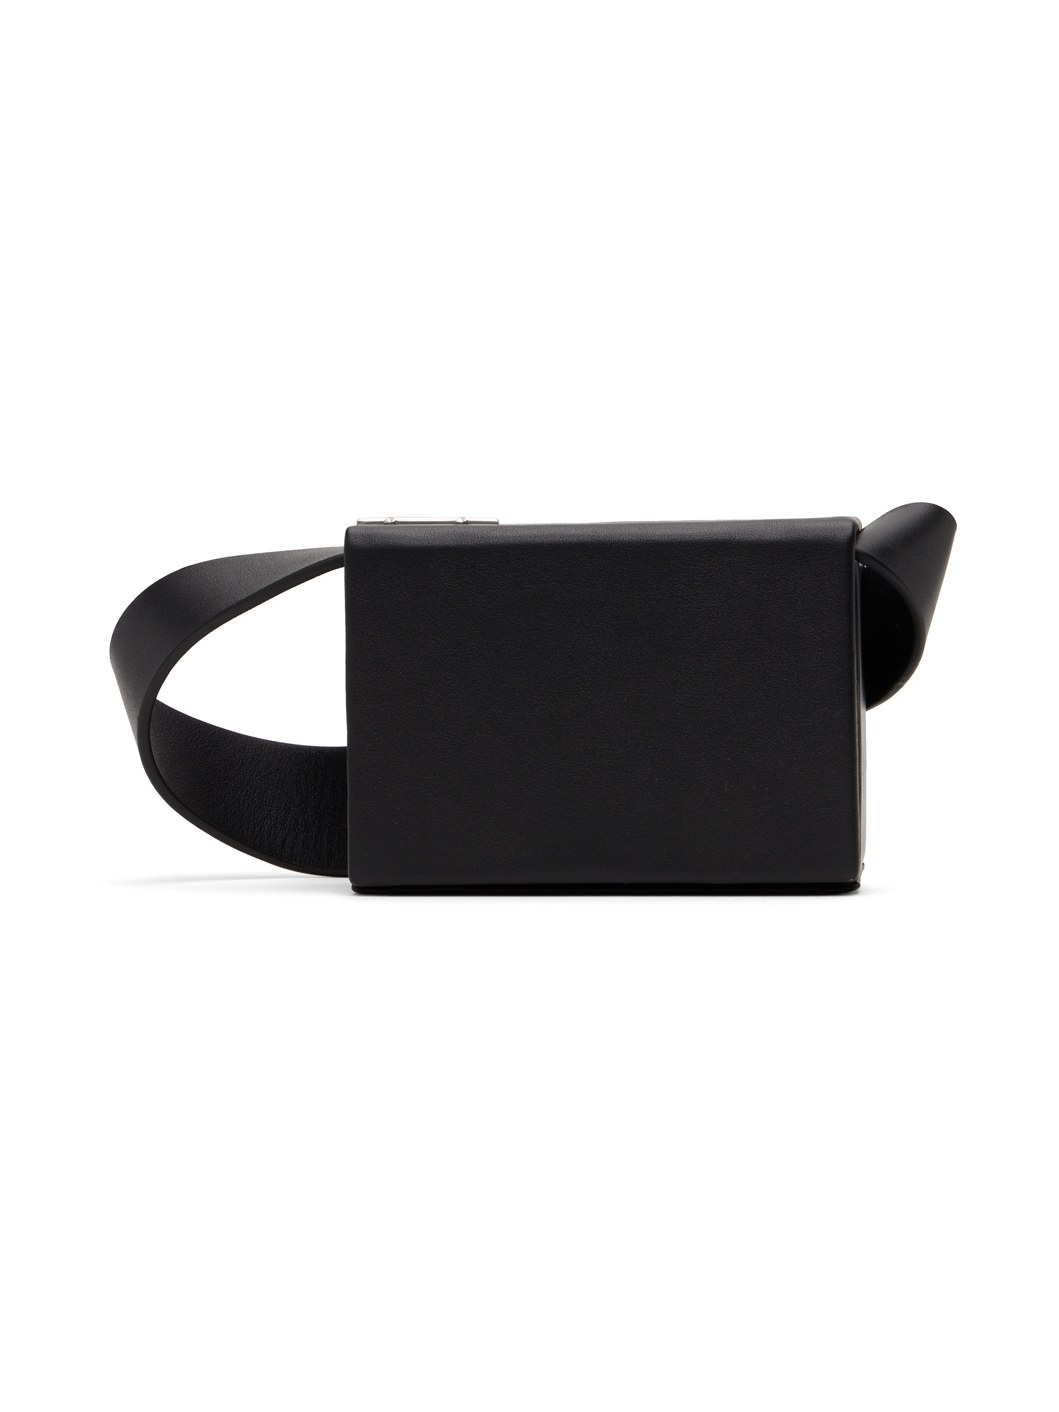 Black Corolla Wallet Bag - 1